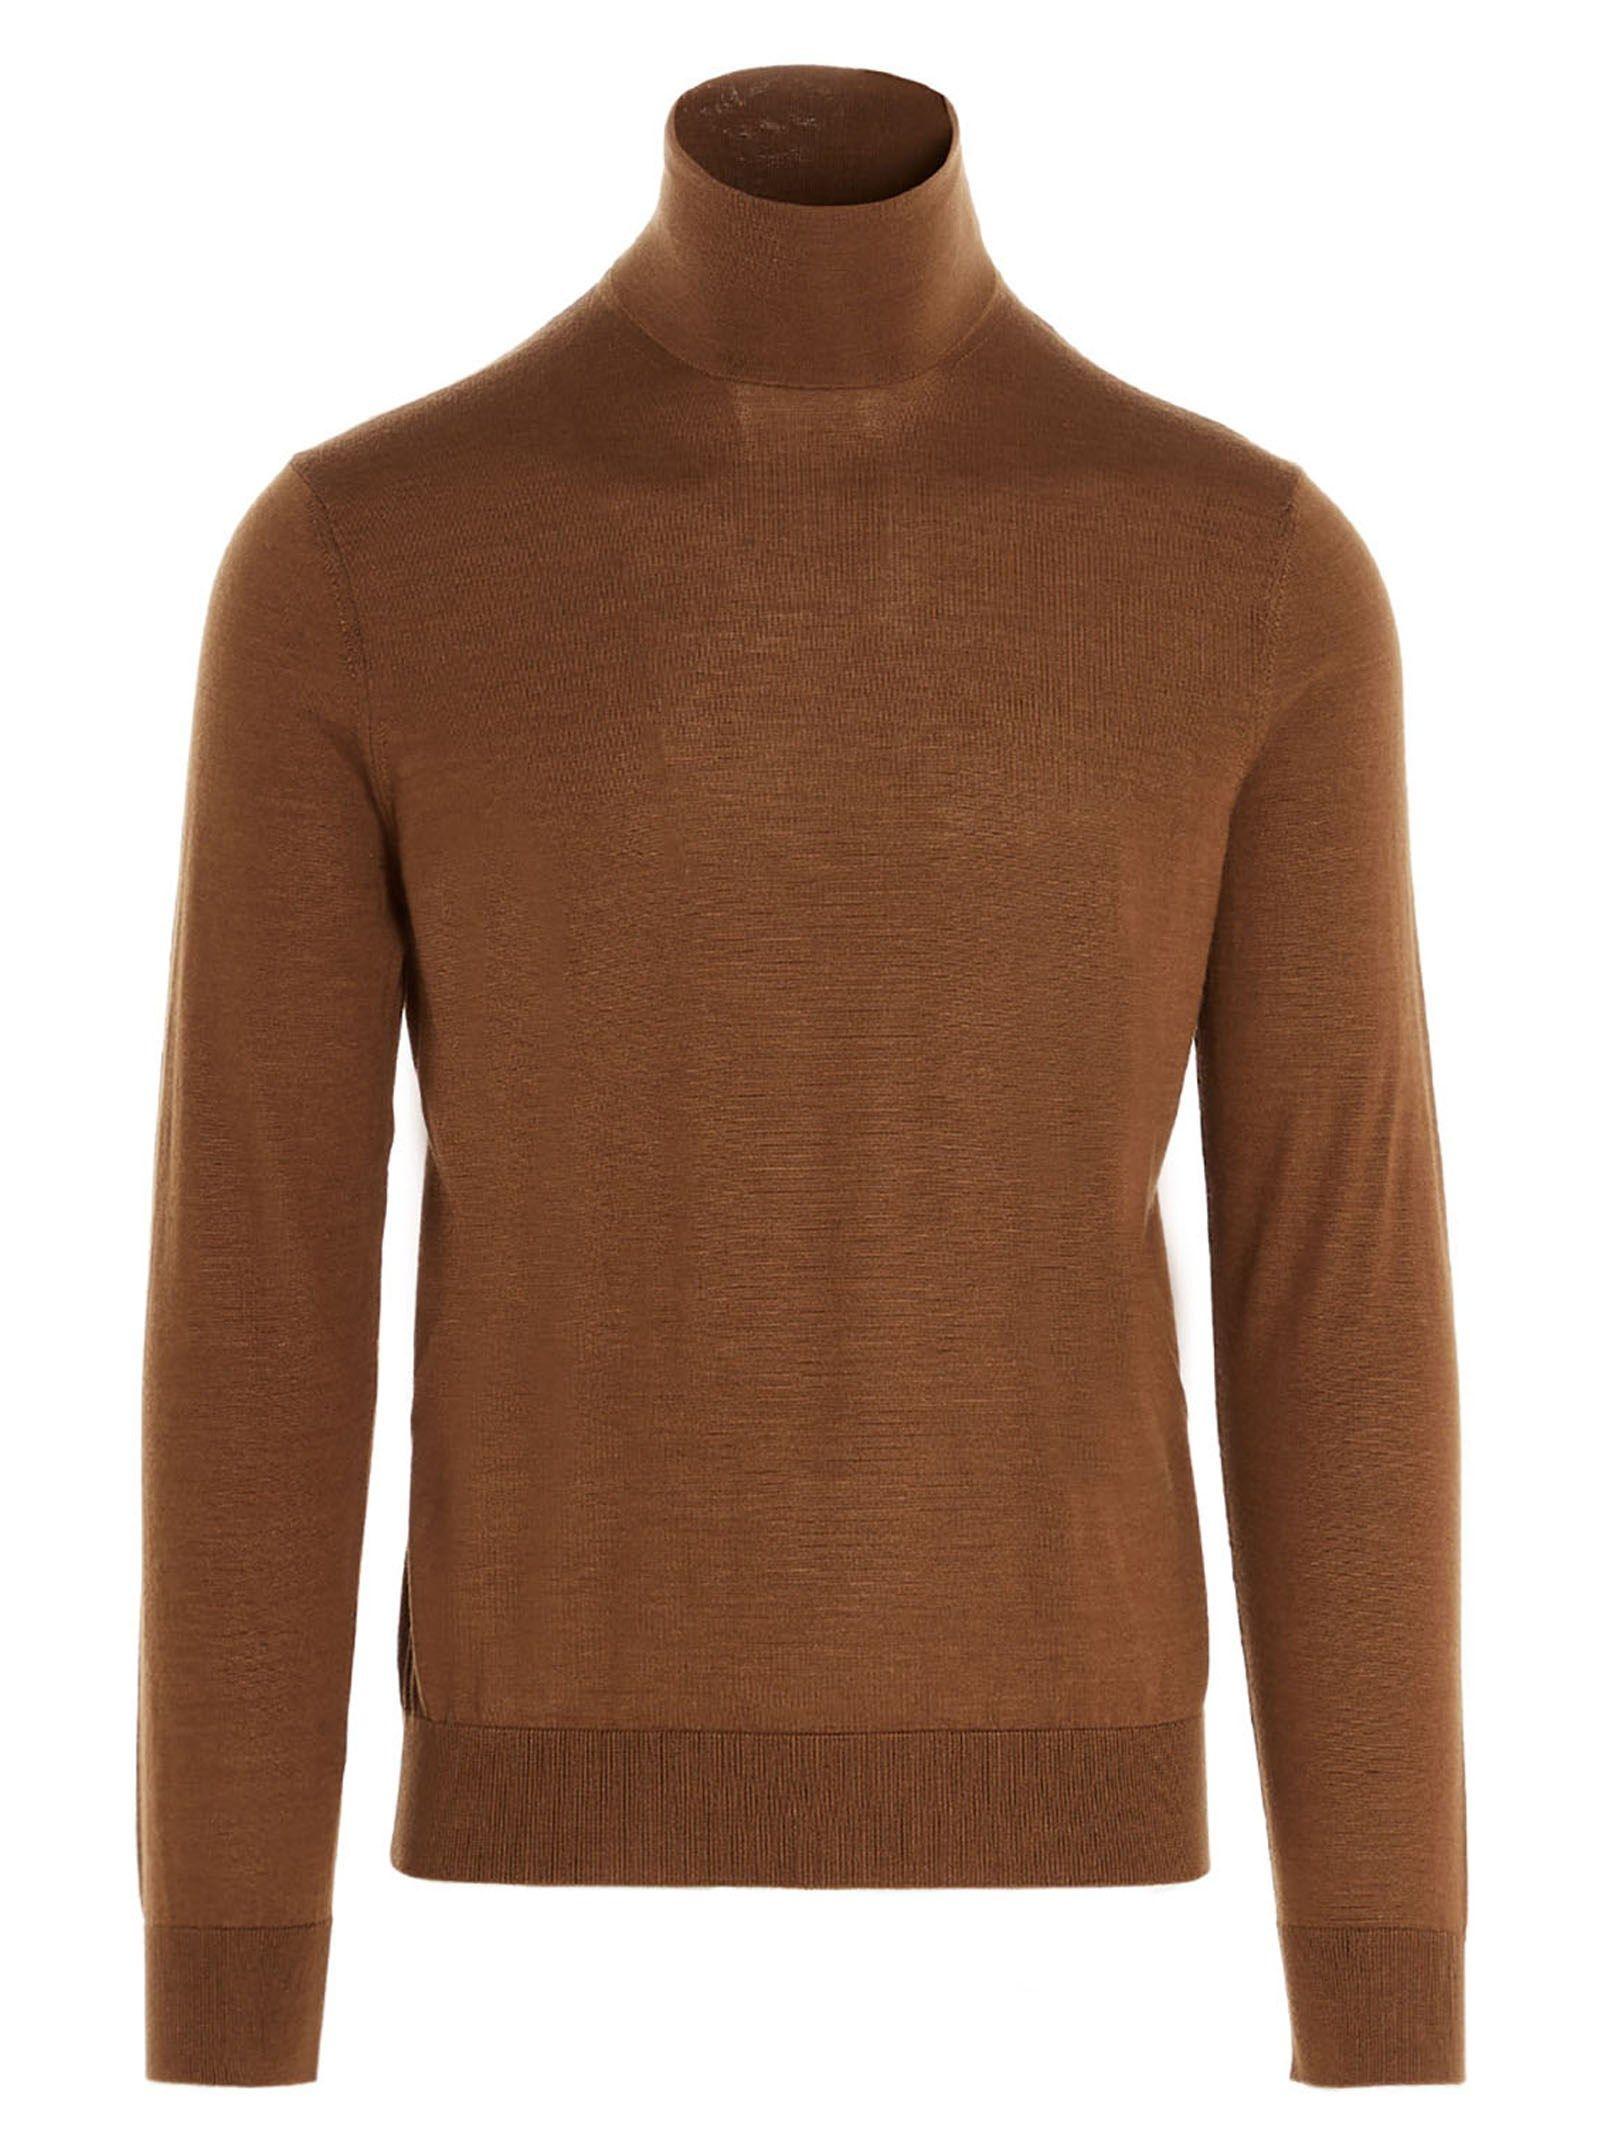 Ermenegildo Zegna Sweater in Brown for Men - Lyst